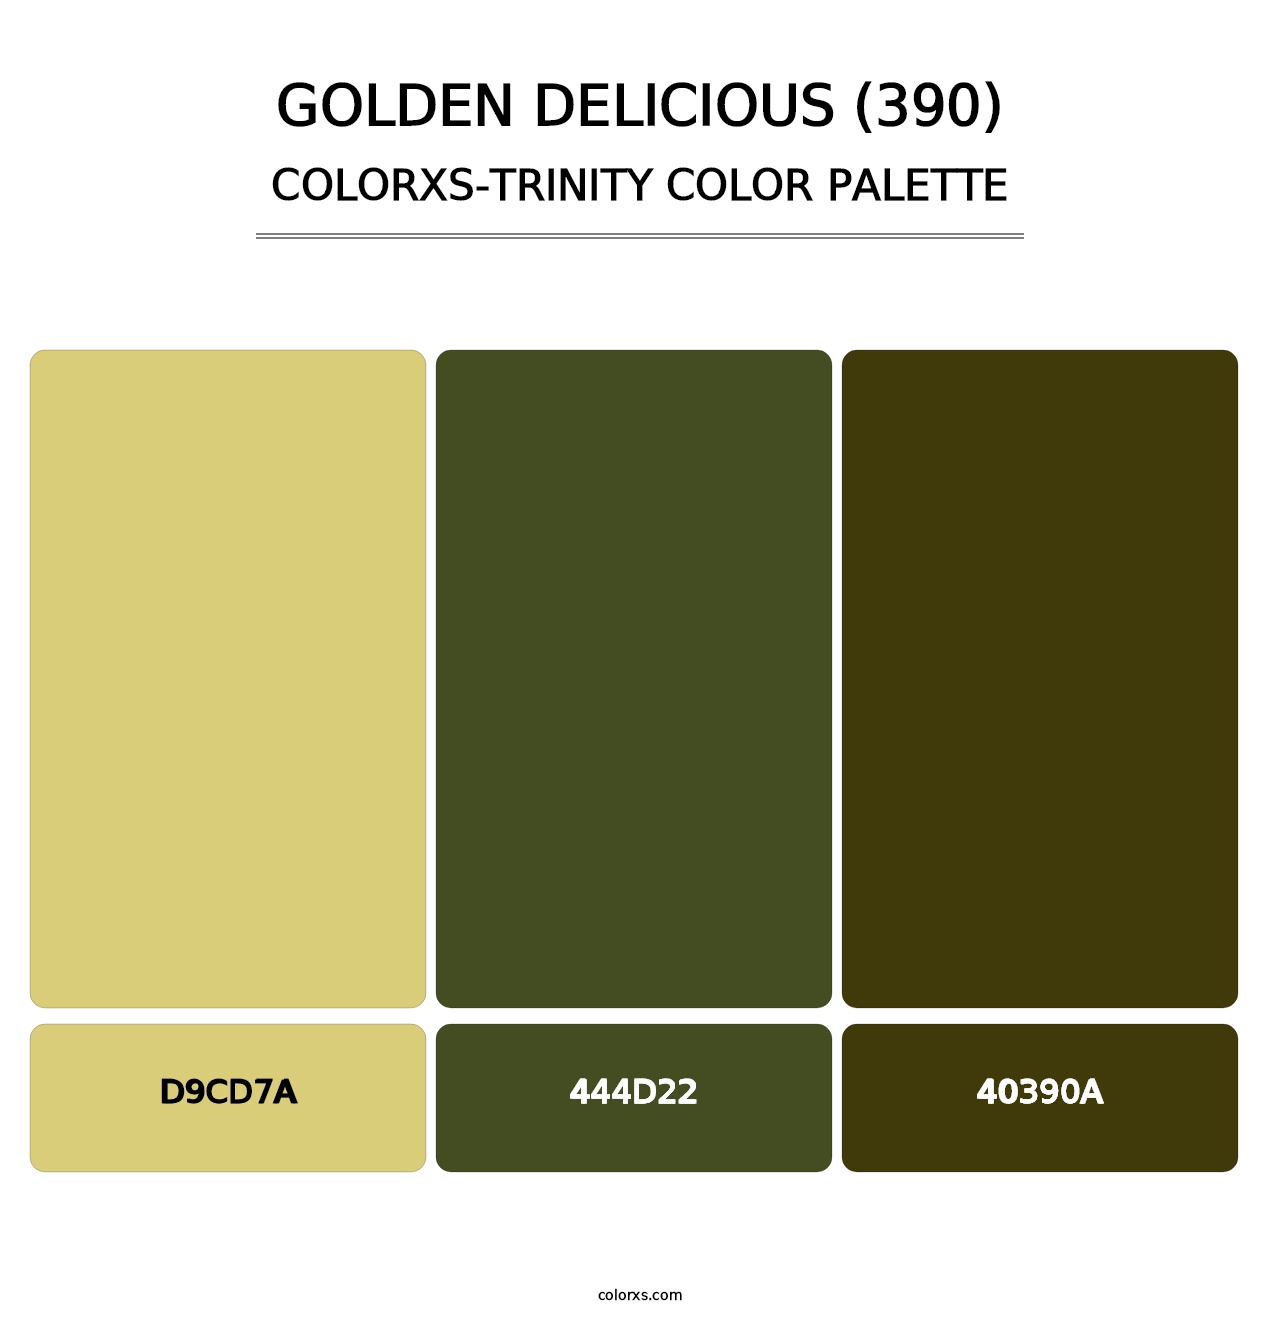 Golden Delicious (390) - Colorxs Trinity Palette